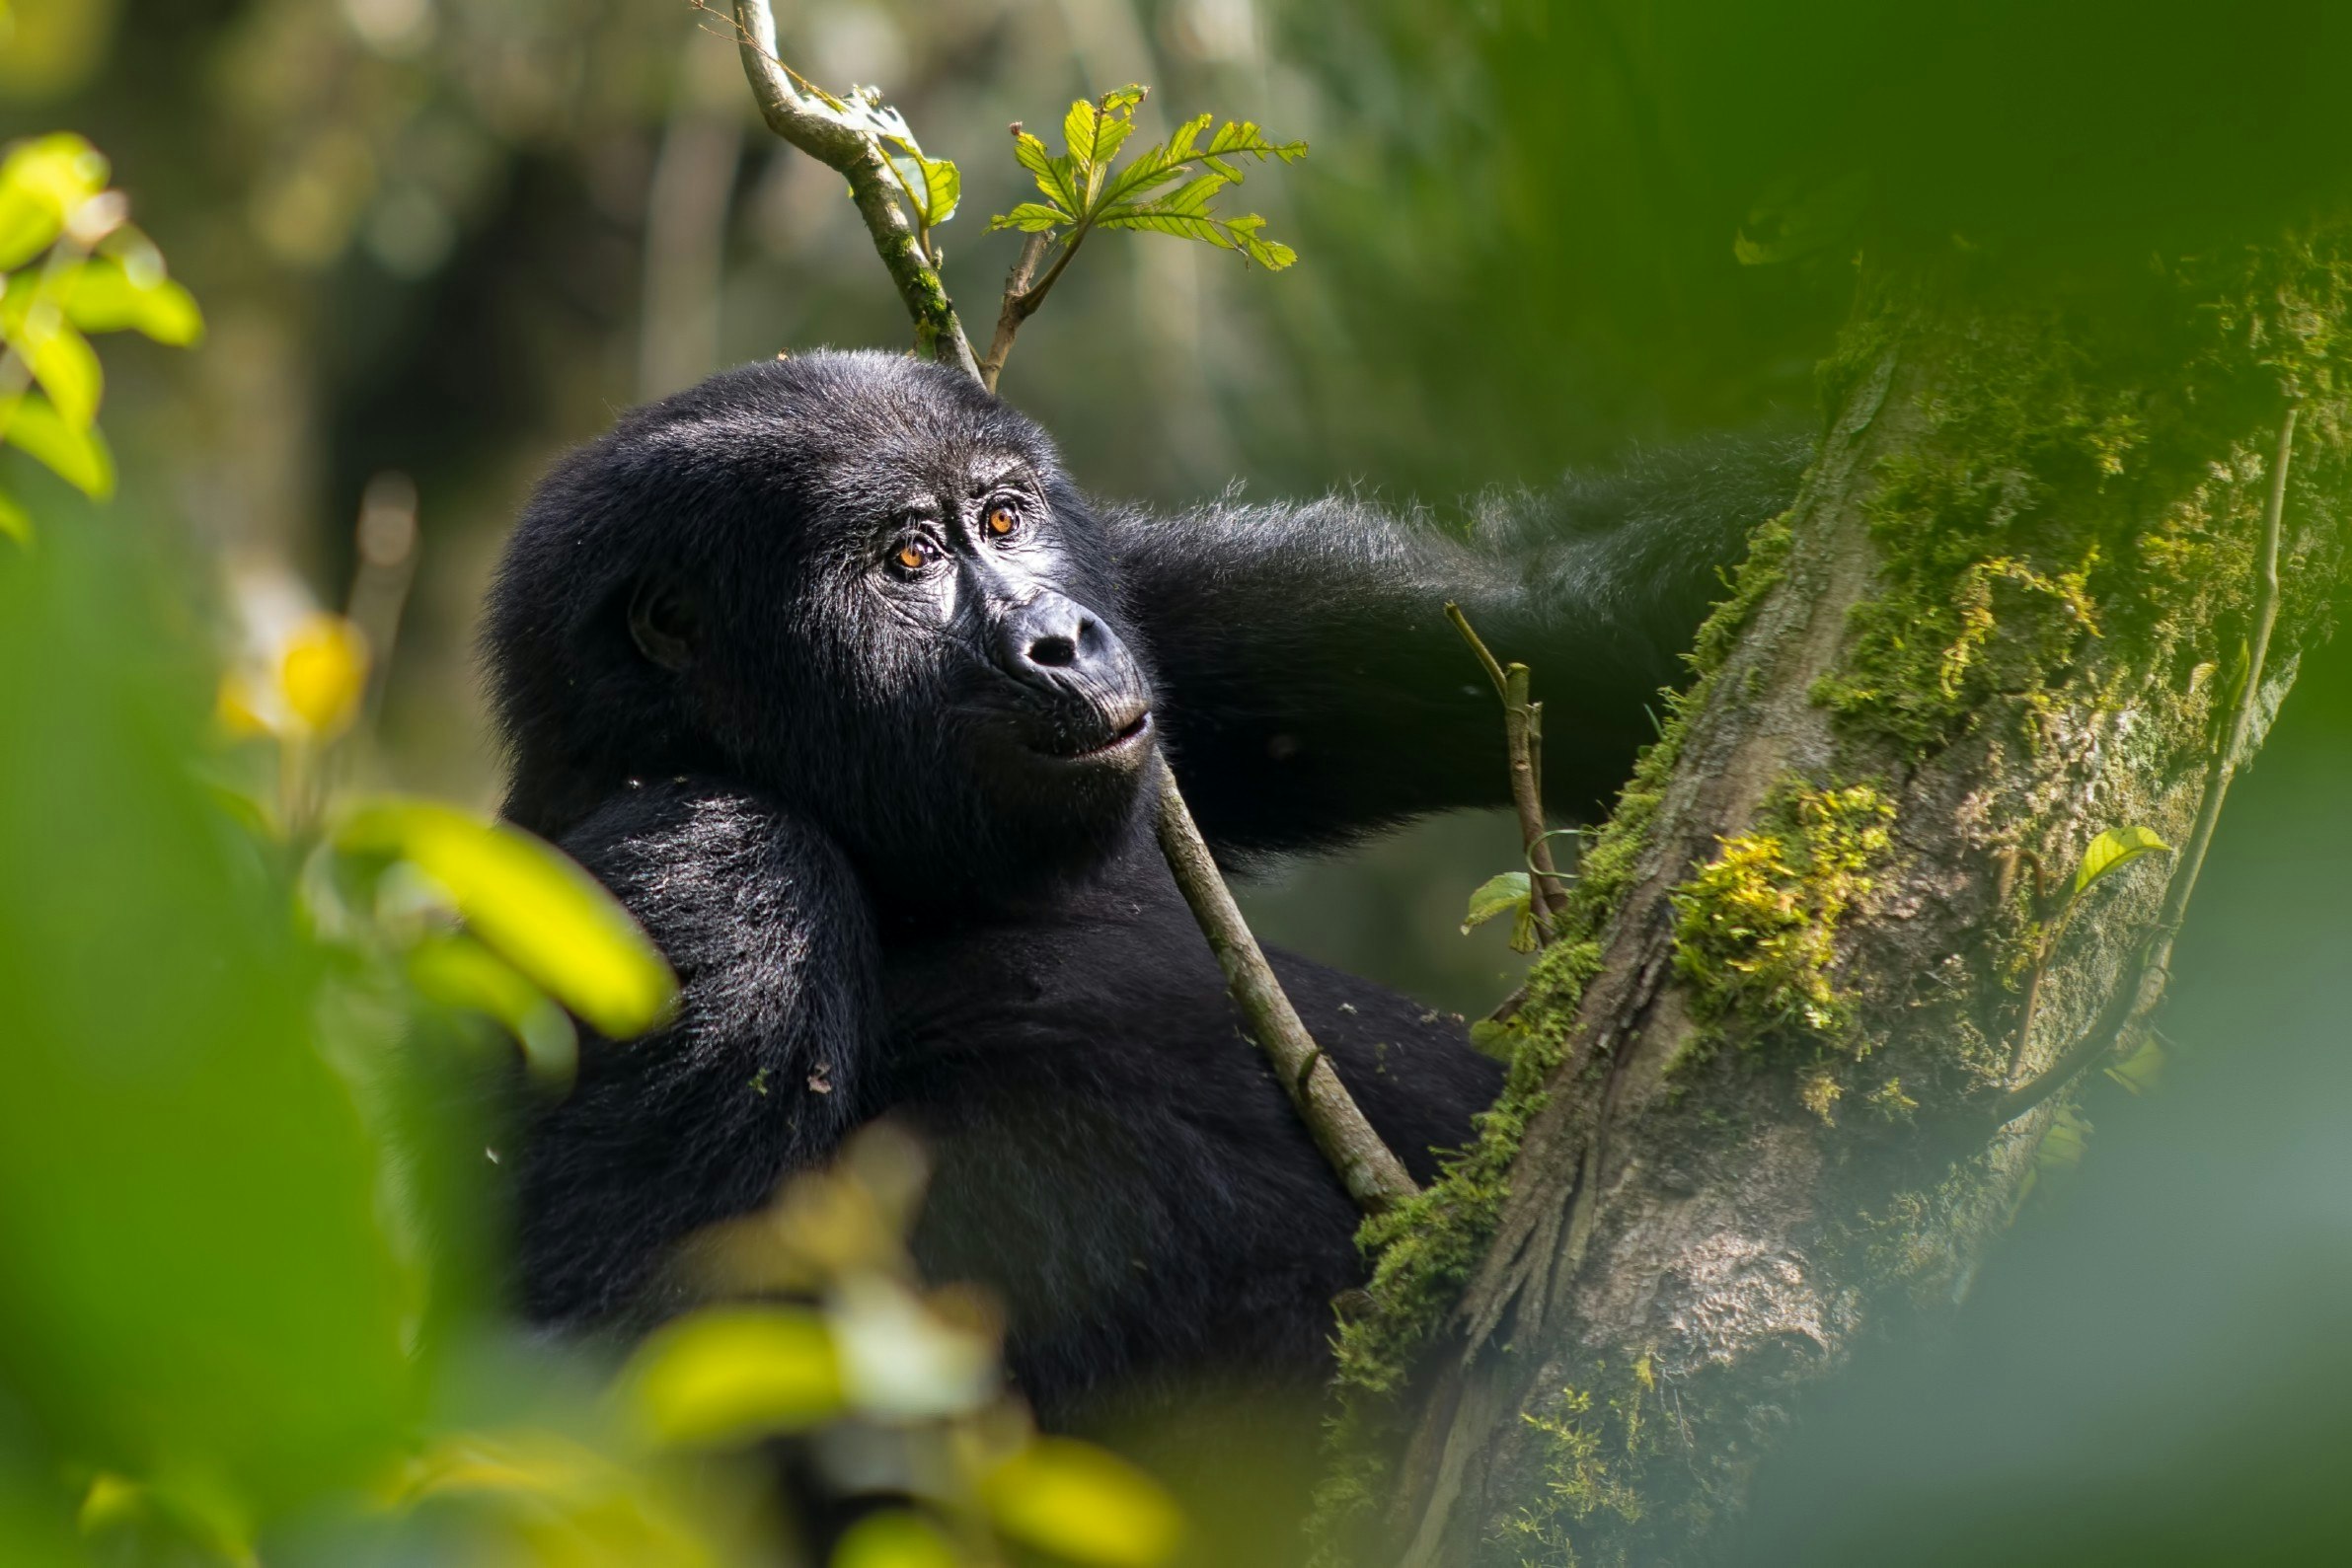 Nshongi mountain gorilla in foliage in Uganda.